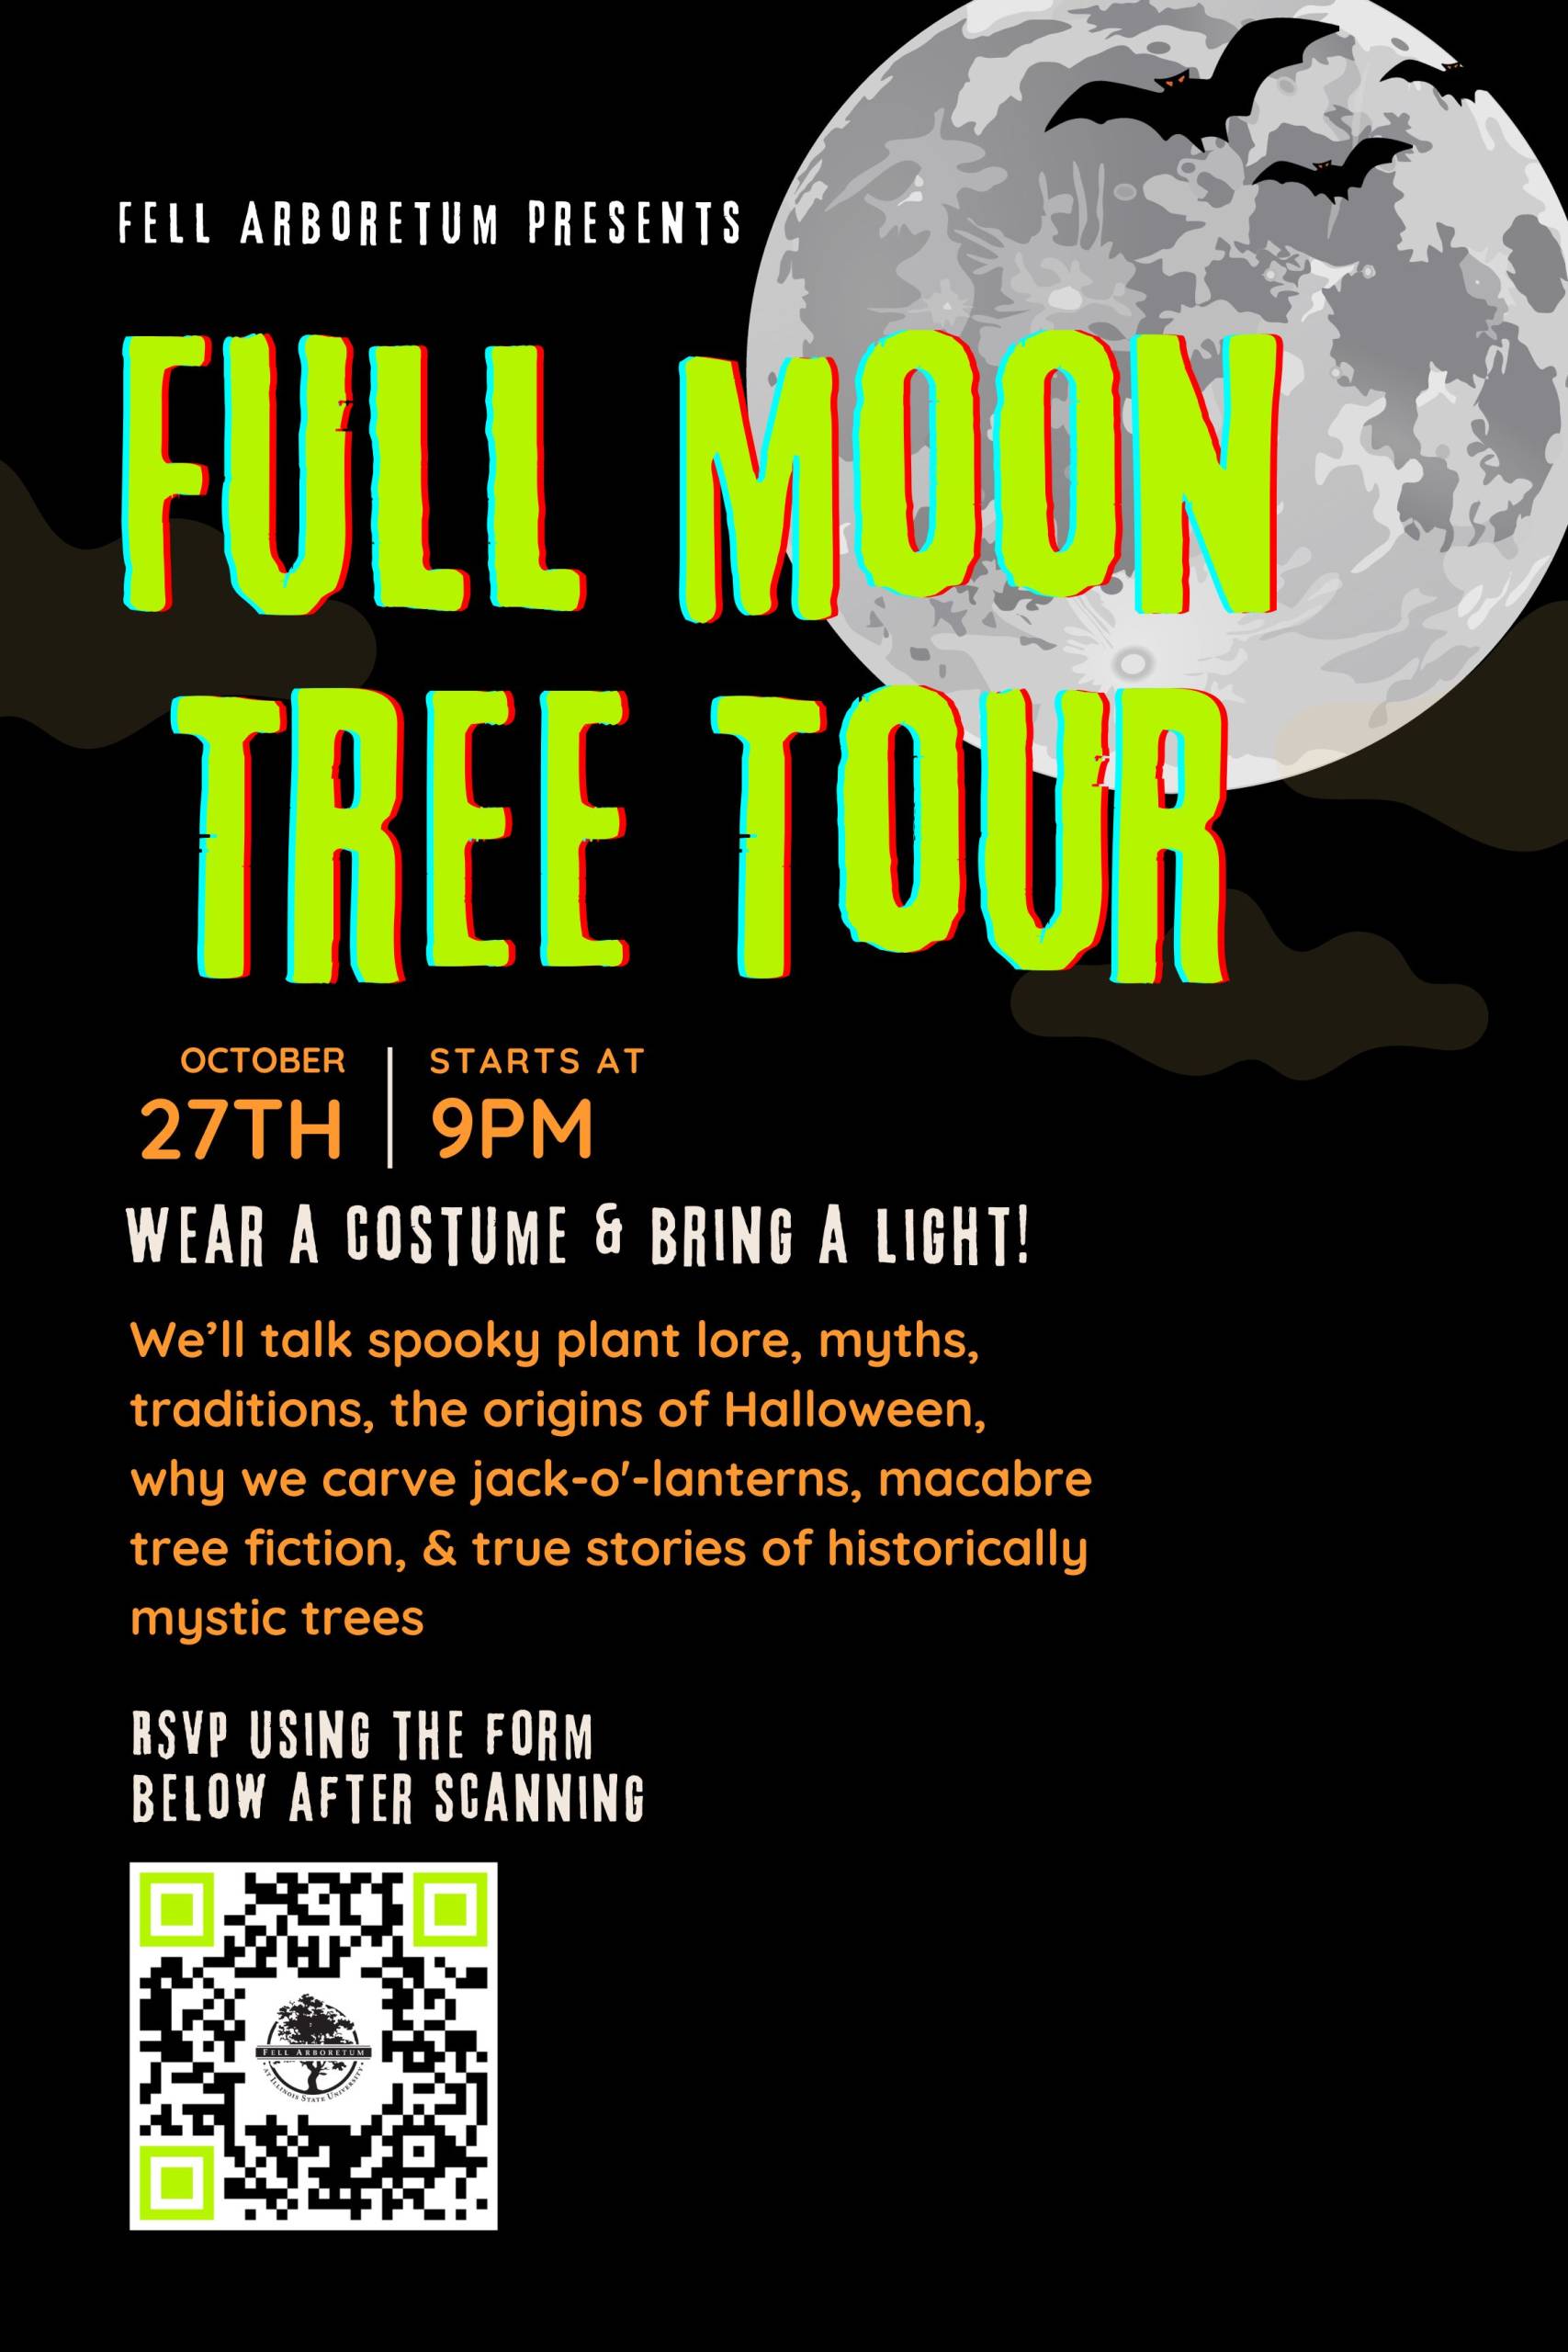 Full Moon Tree Tour in the Fell Arboretum